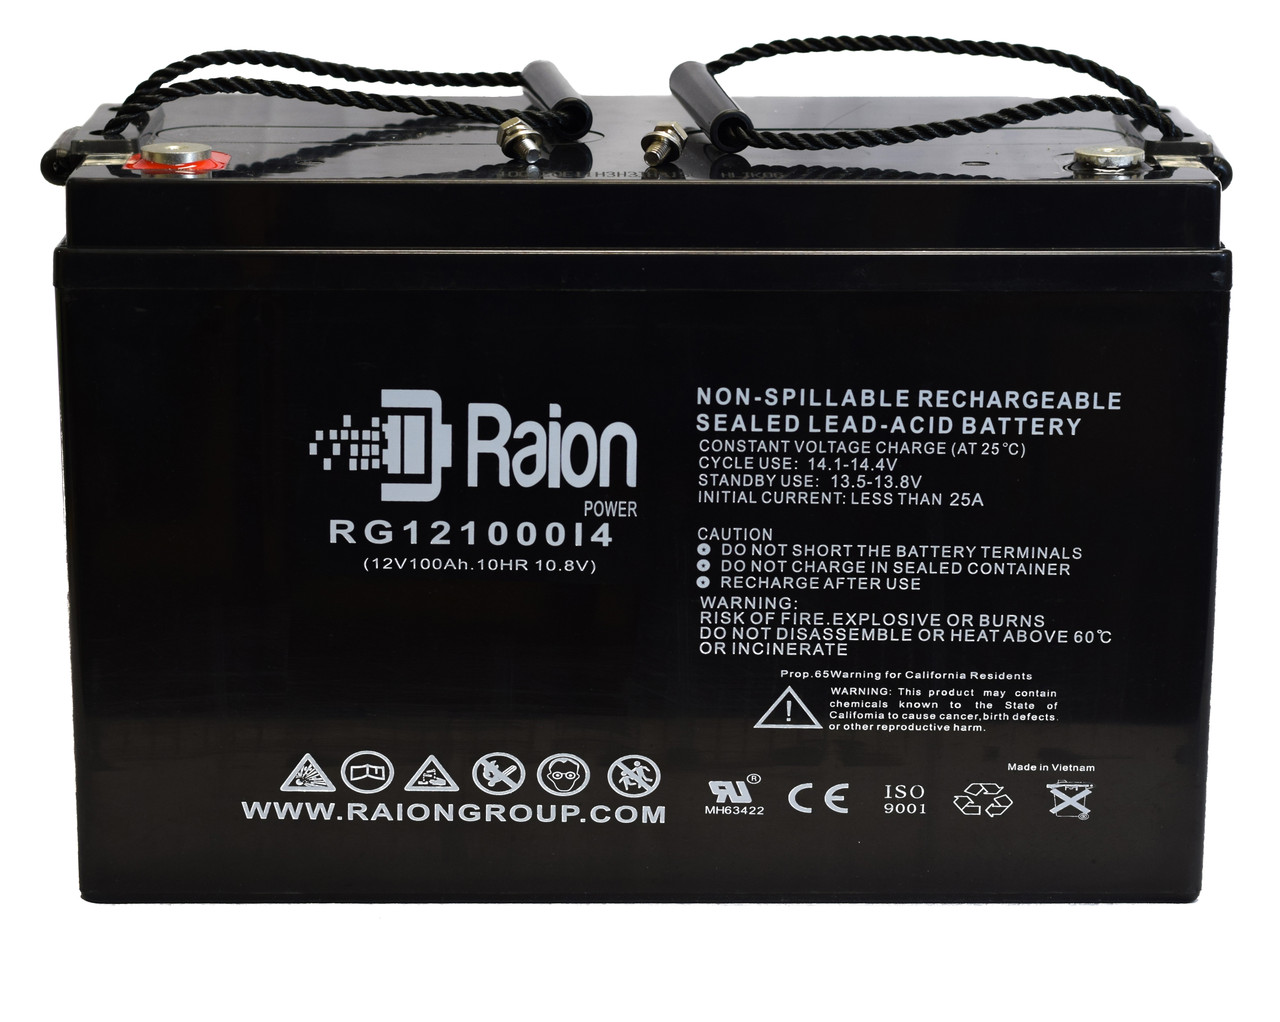 Raion Power 12V 100Ah SLA Battery With I4 Terminals For Sacred Sun SP12-100